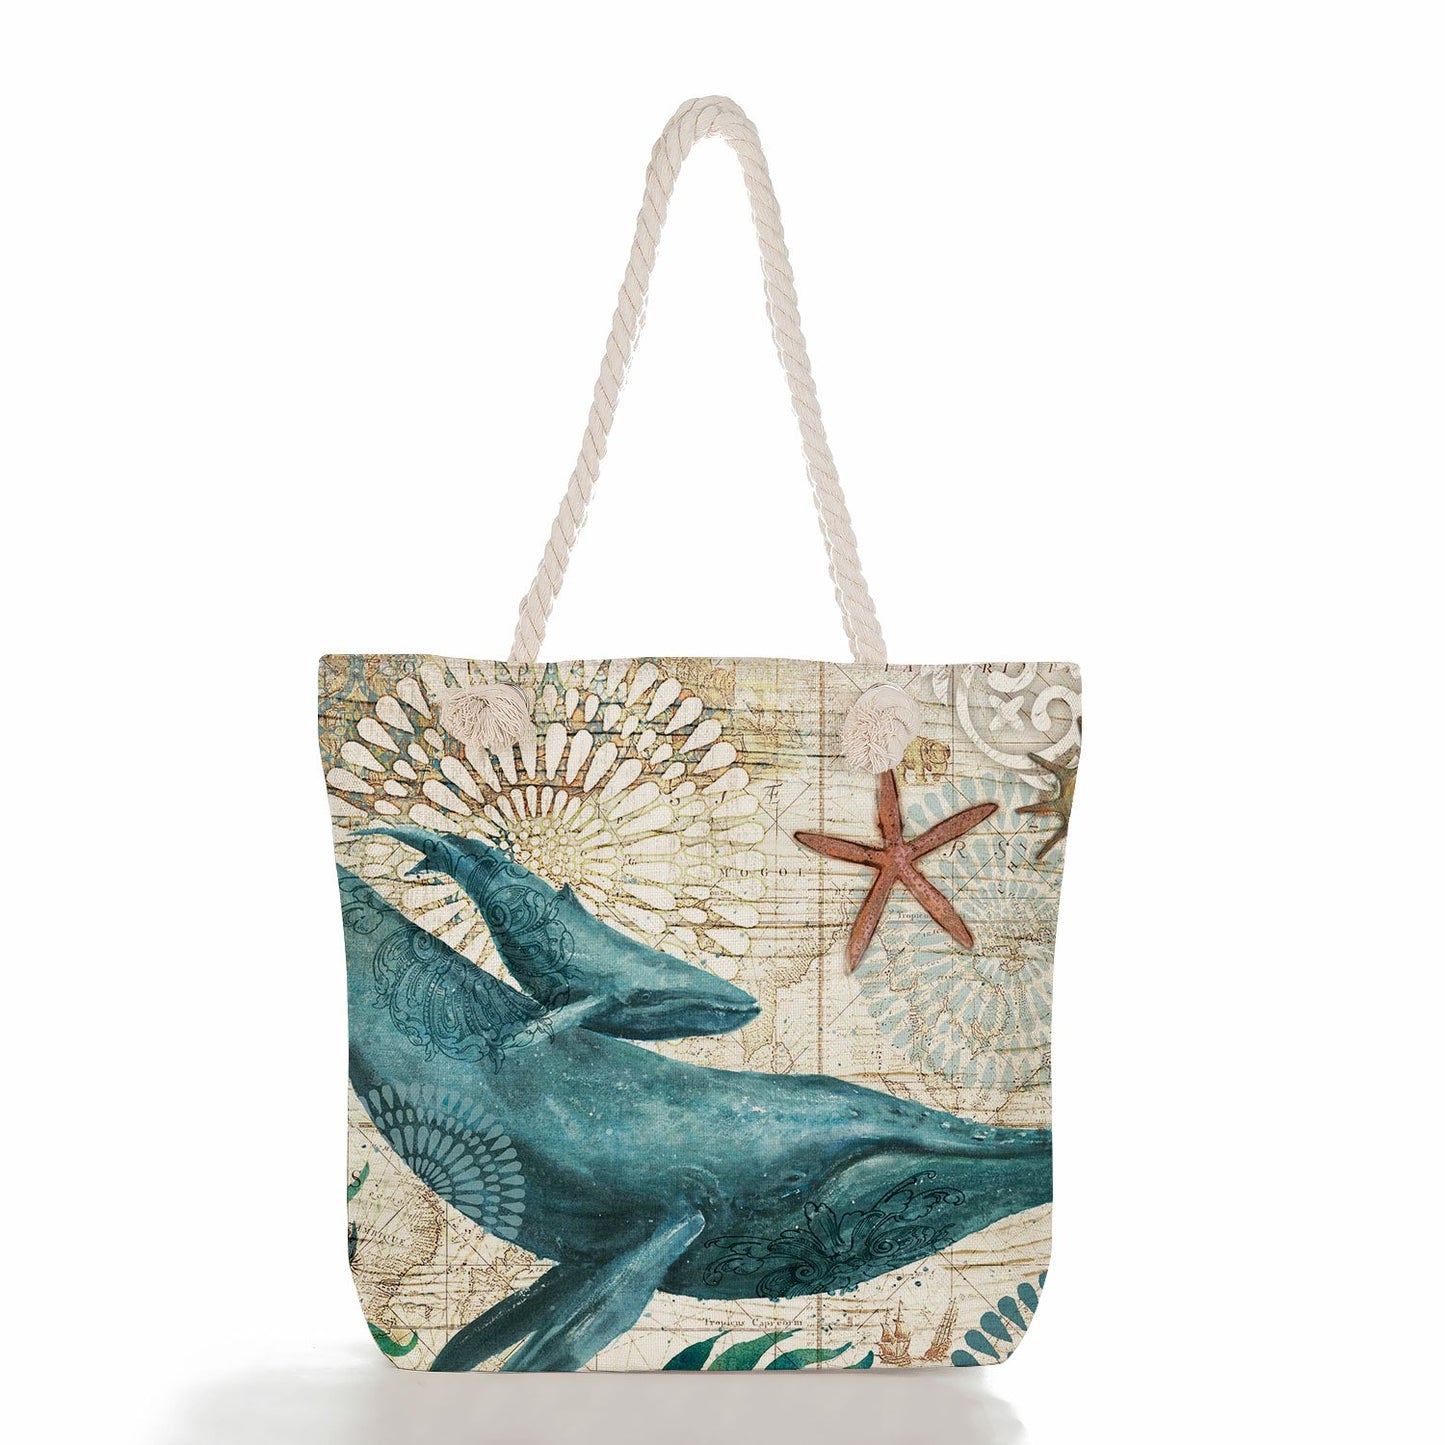 Animal Pattern Canvas Shoulder Bag - Large Capacity Casual Beach Handbag